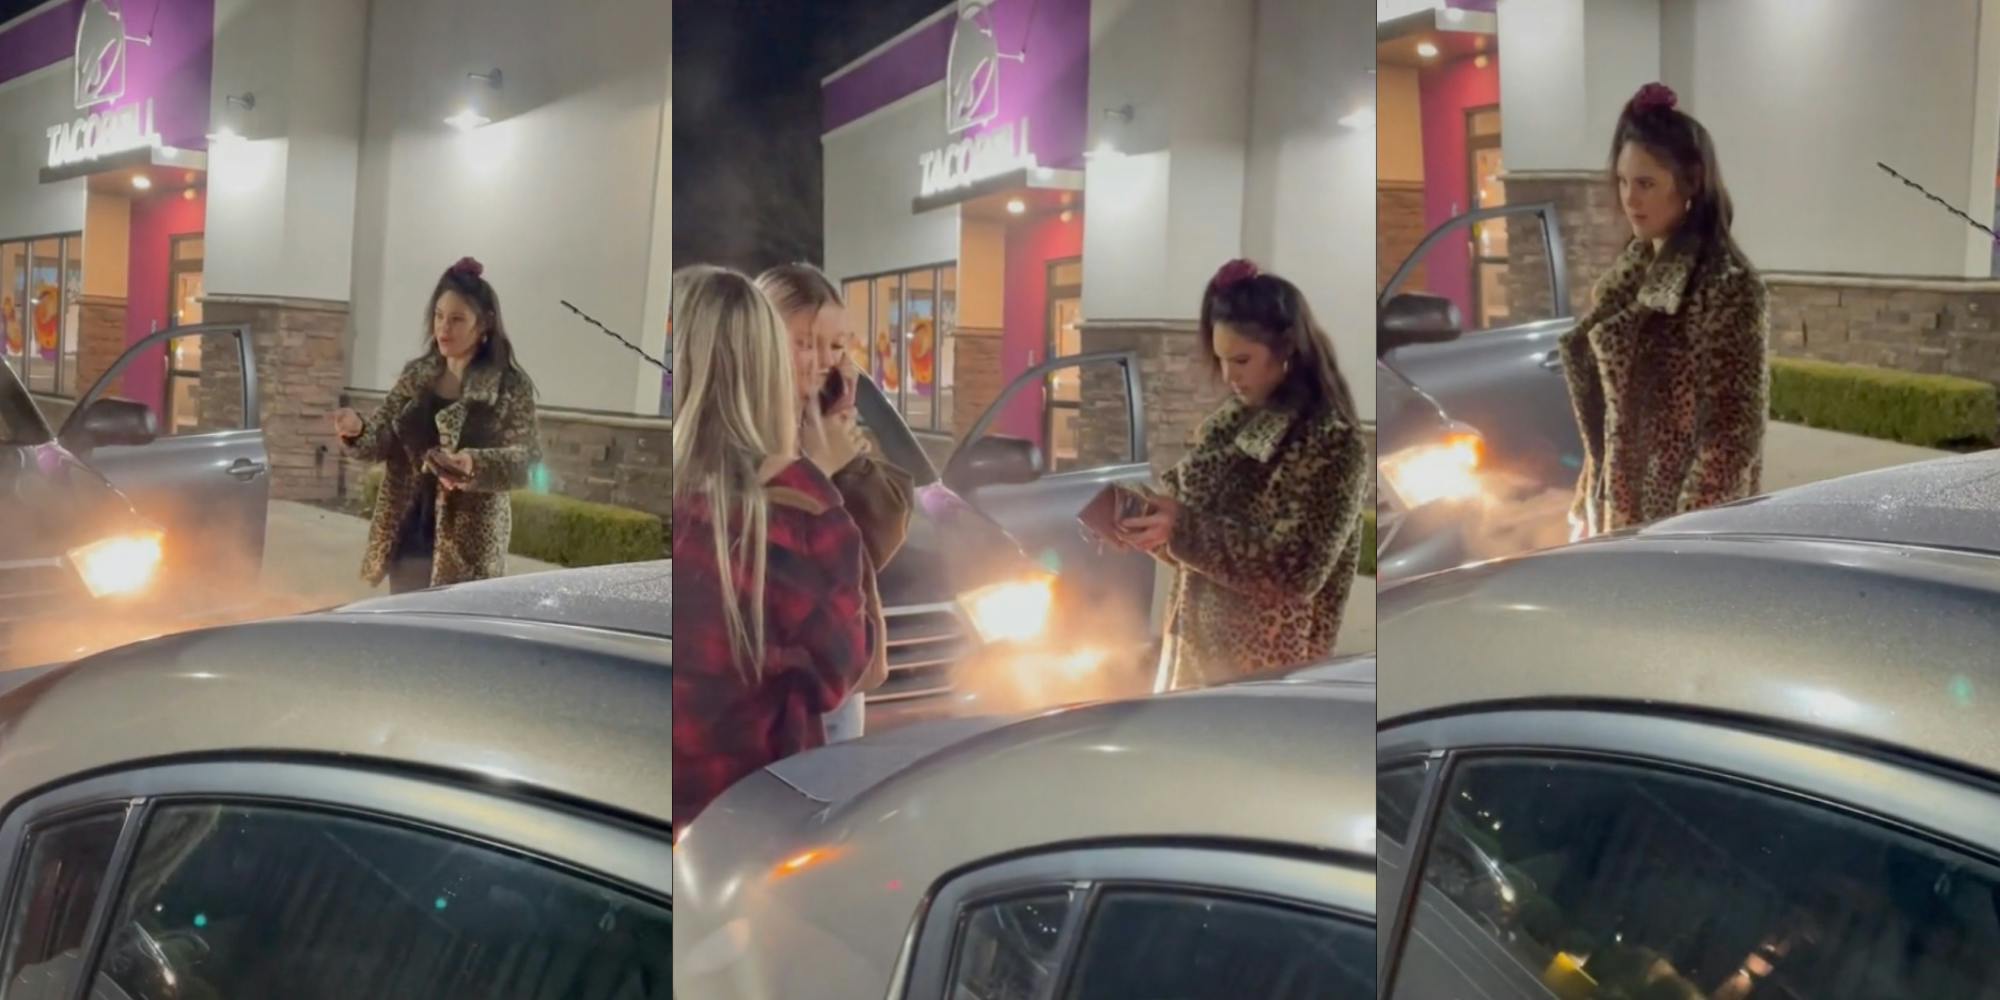 ‘Y’all are Karens’: TikToker says drunk woman hit her car in a Taco Bell drive-thru, sparking debate